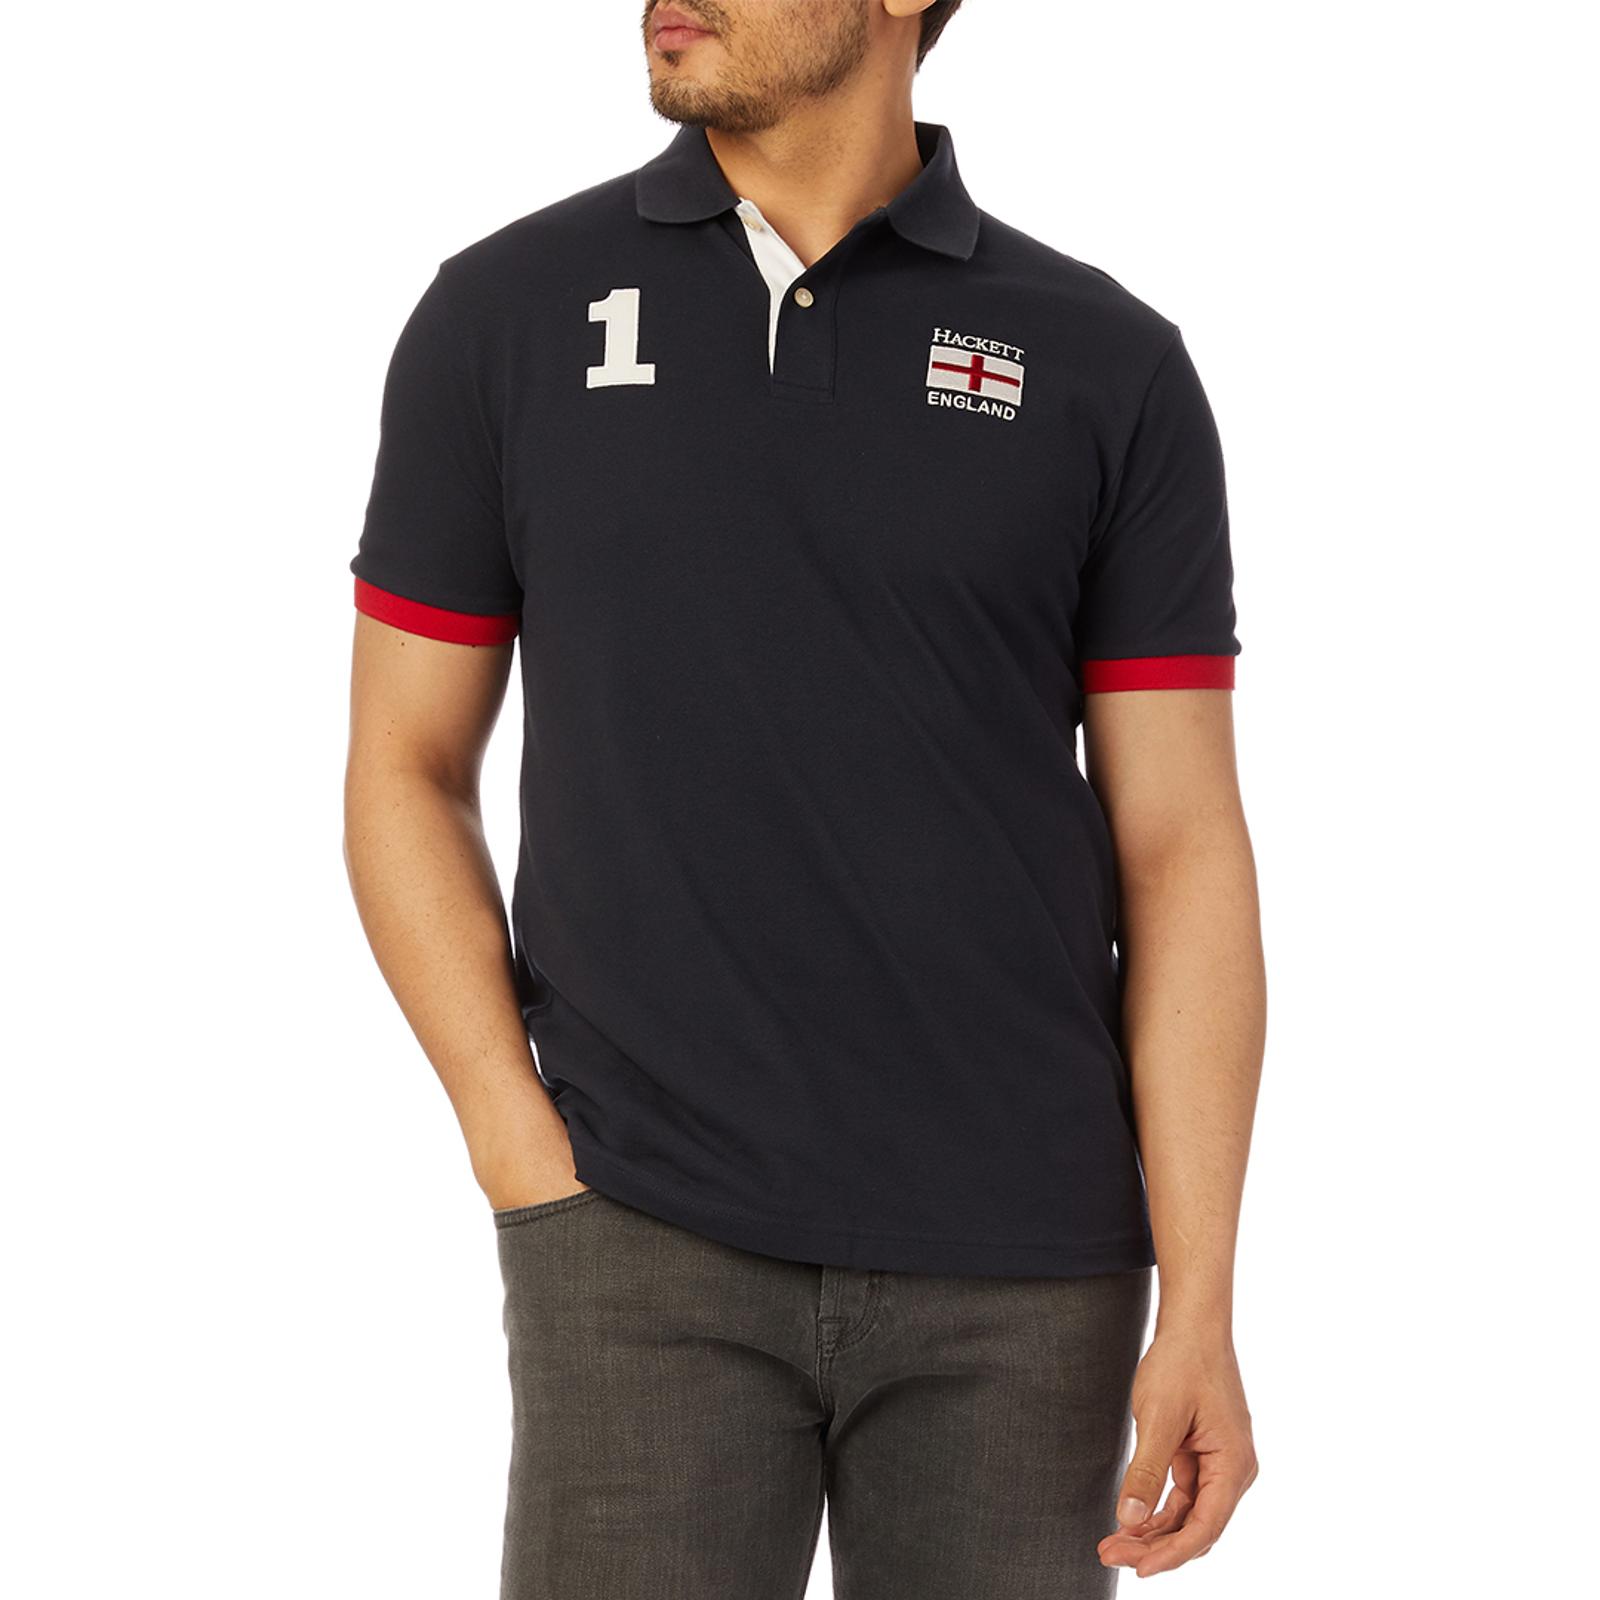 forbundet under Nedgang Navy England Patch Logo Cotton Polo Shirt - BrandAlley